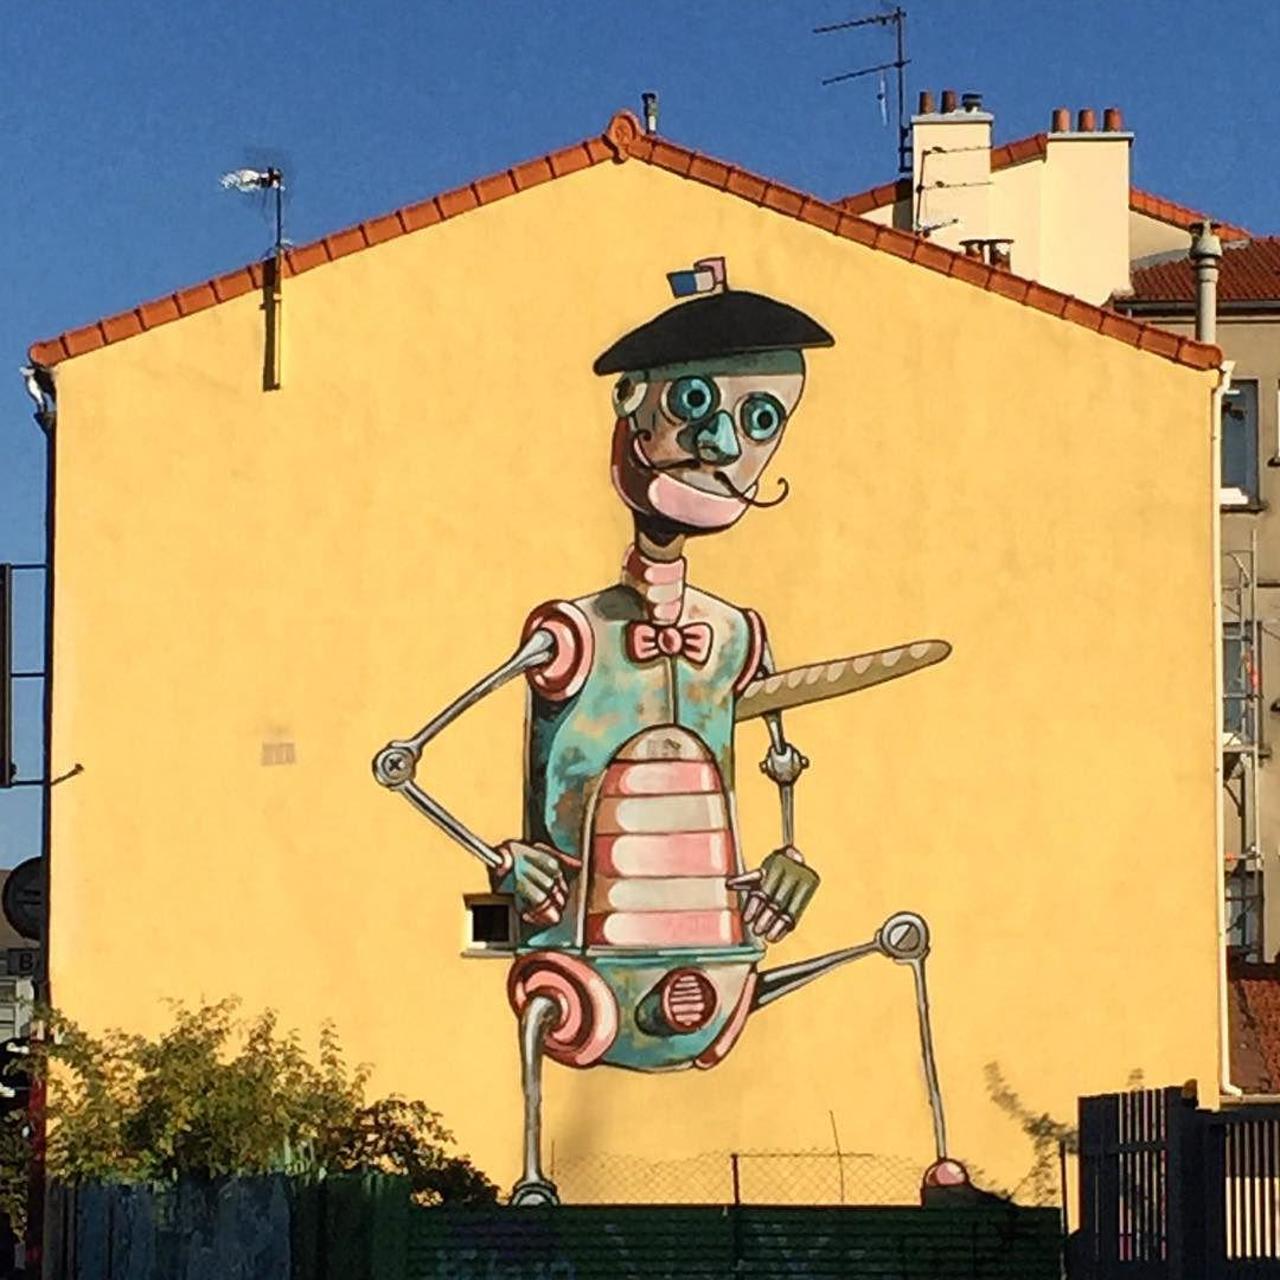 #Paris #graffiti photo by @jeanlucr http://ift.tt/1Pb8cYl #StreetArt http://t.co/8nsGHV0RPh